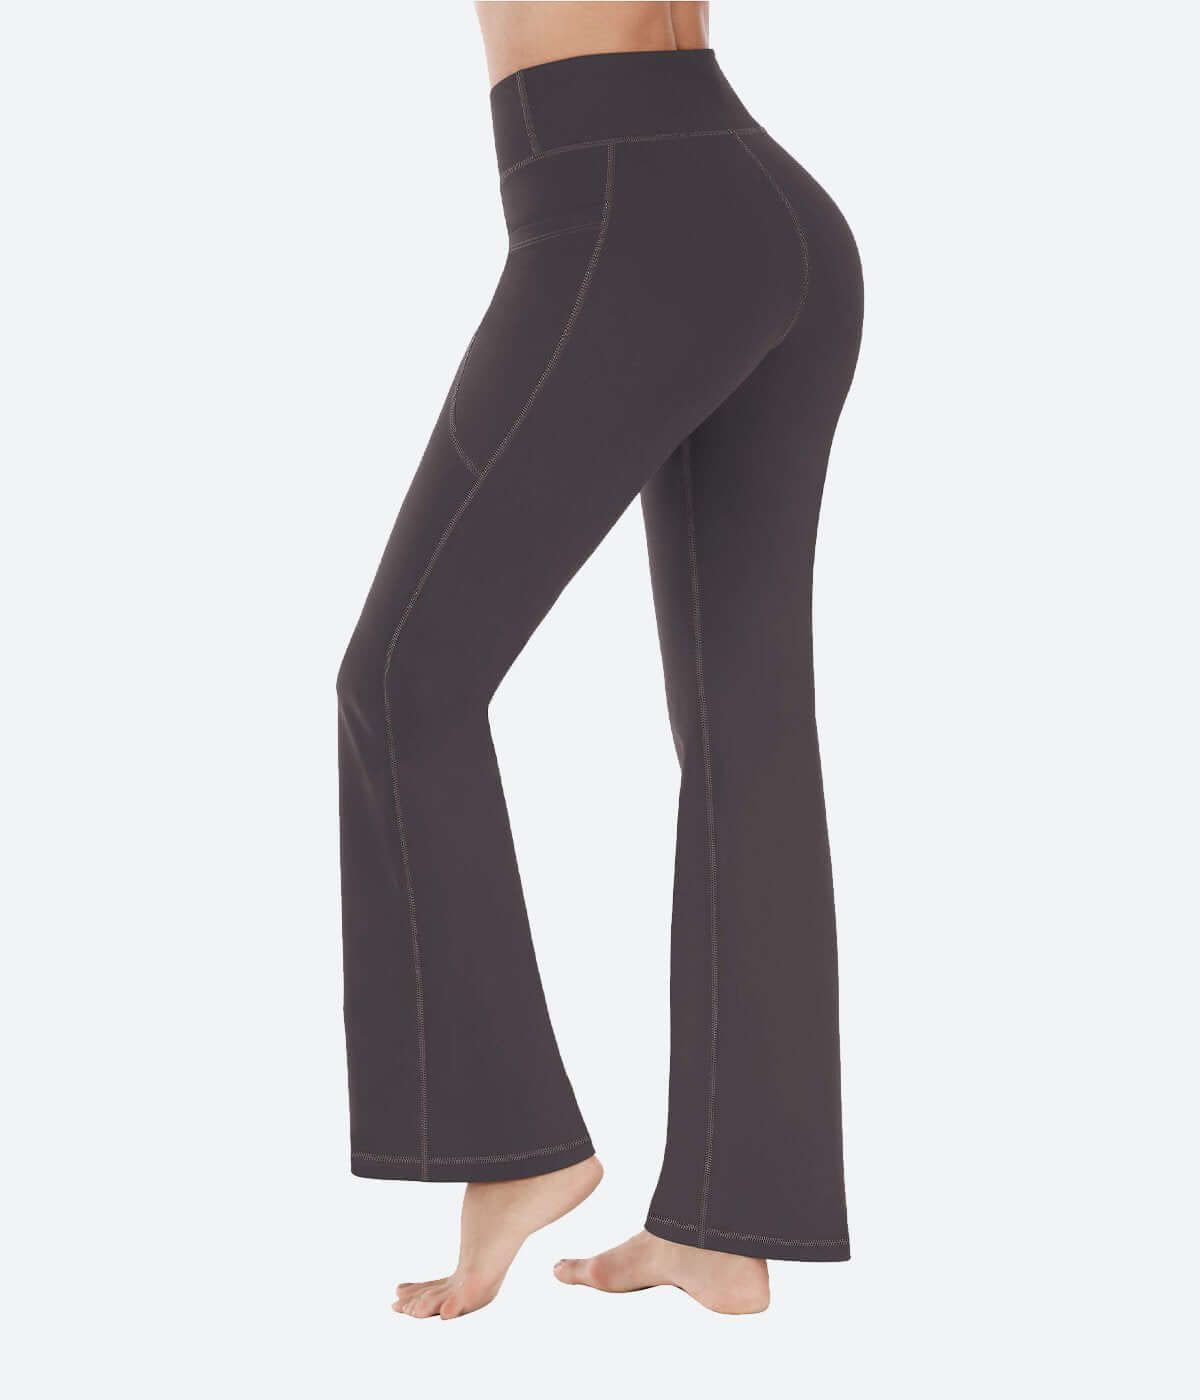 KINPLE Women's Bootcut Yoga Pants with Pockets Tummy Control